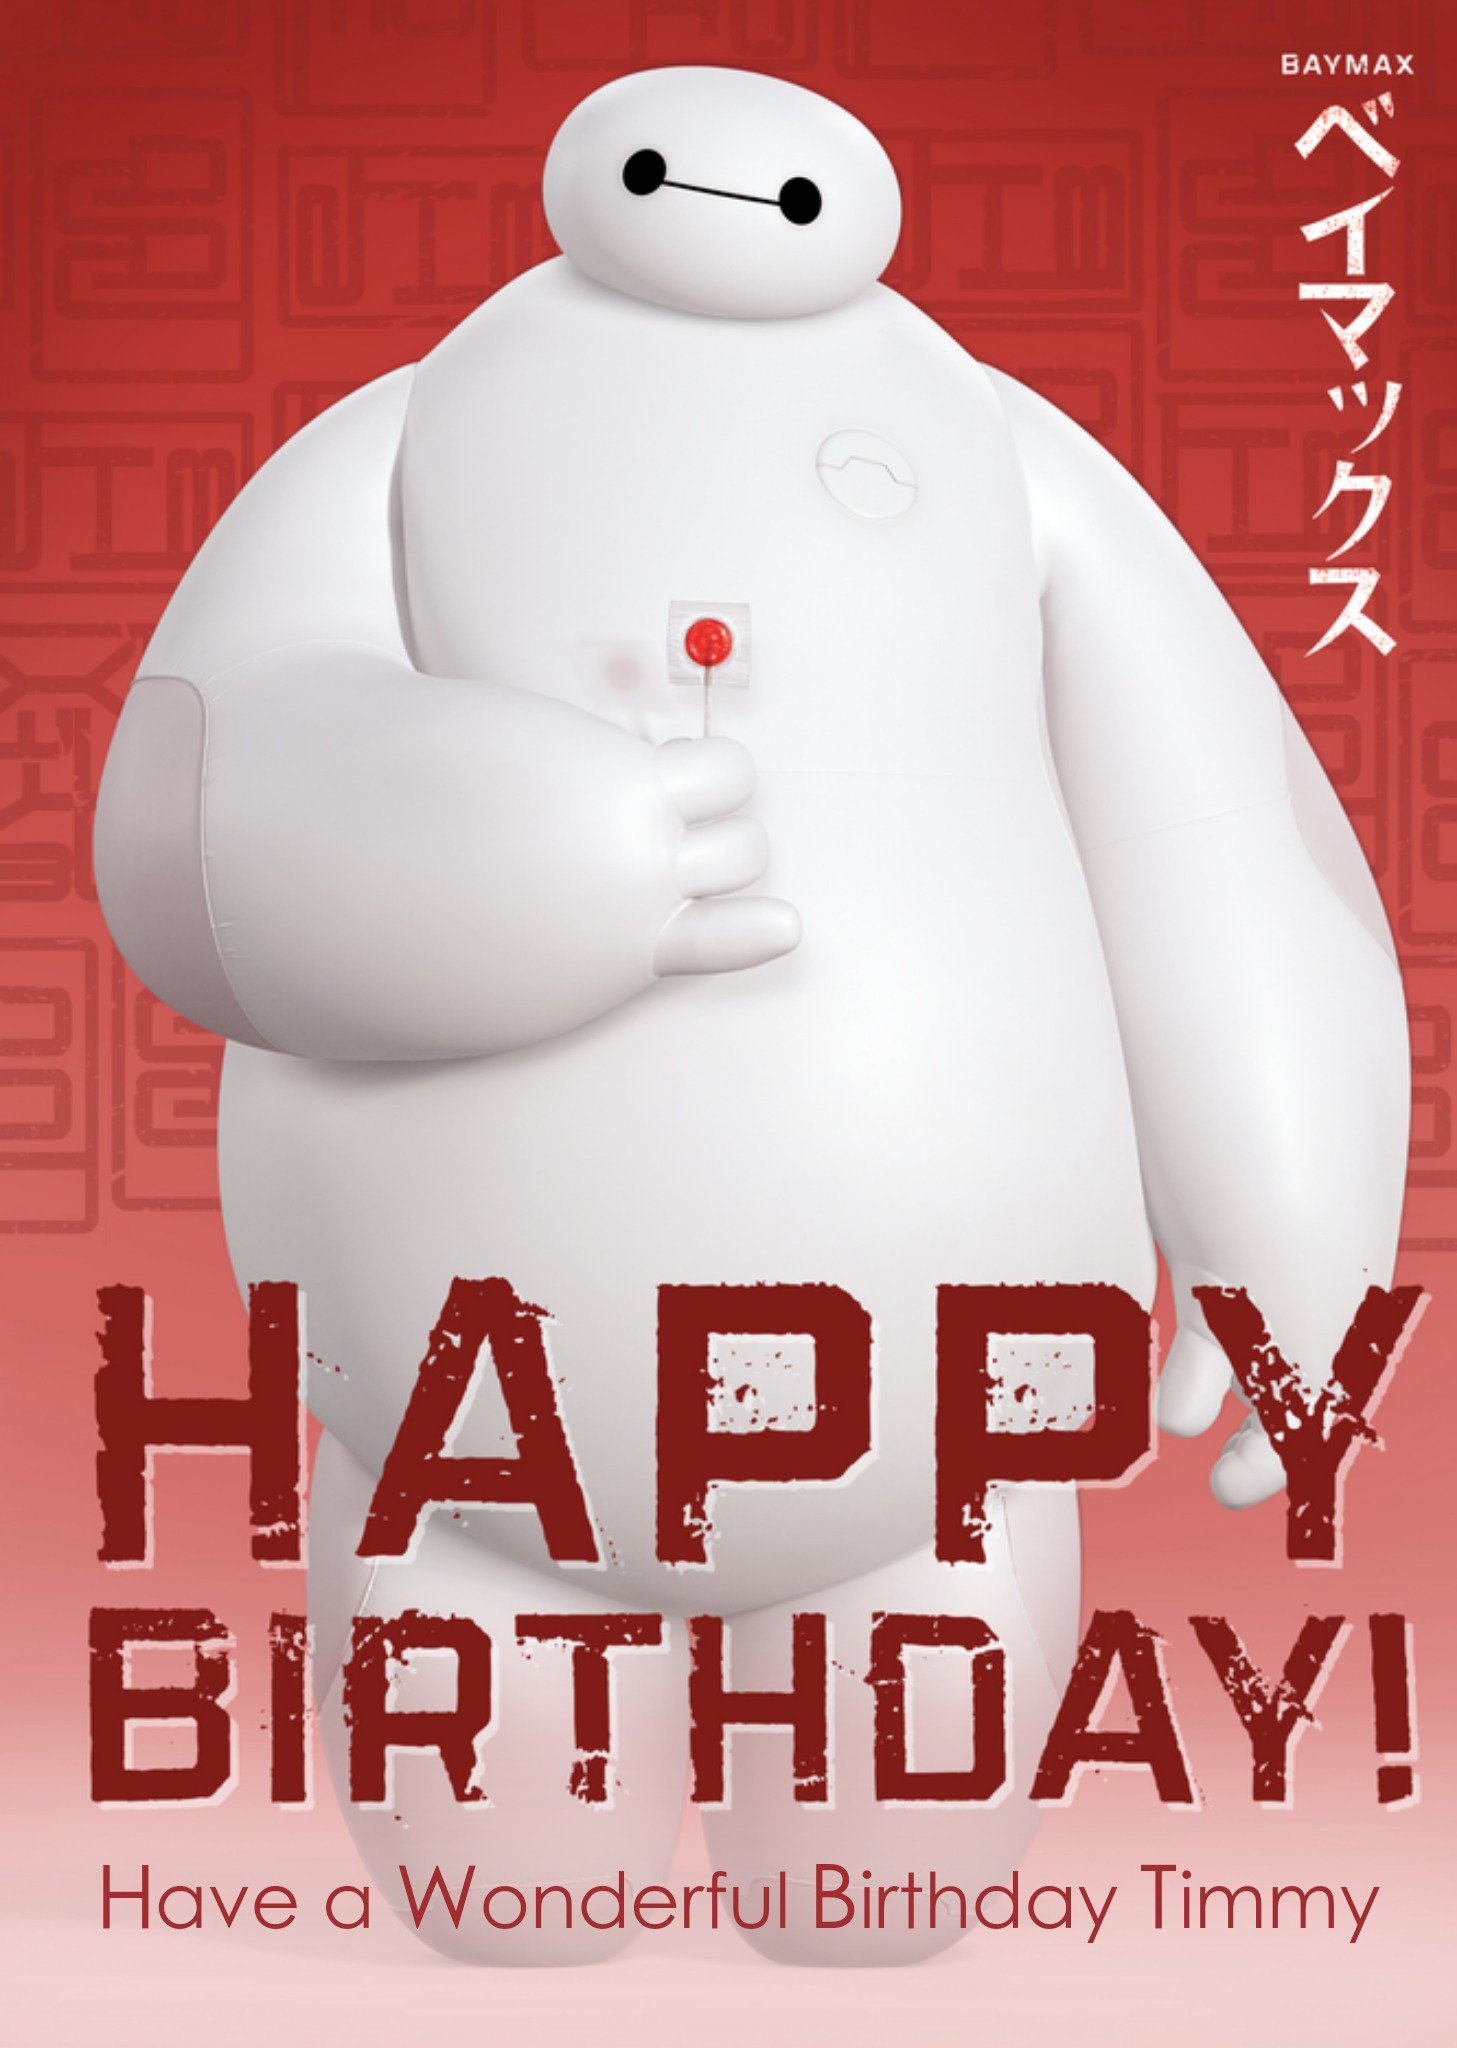 Disney Big Hero 6 Baymax Personalised Happy Birthday Card, Large